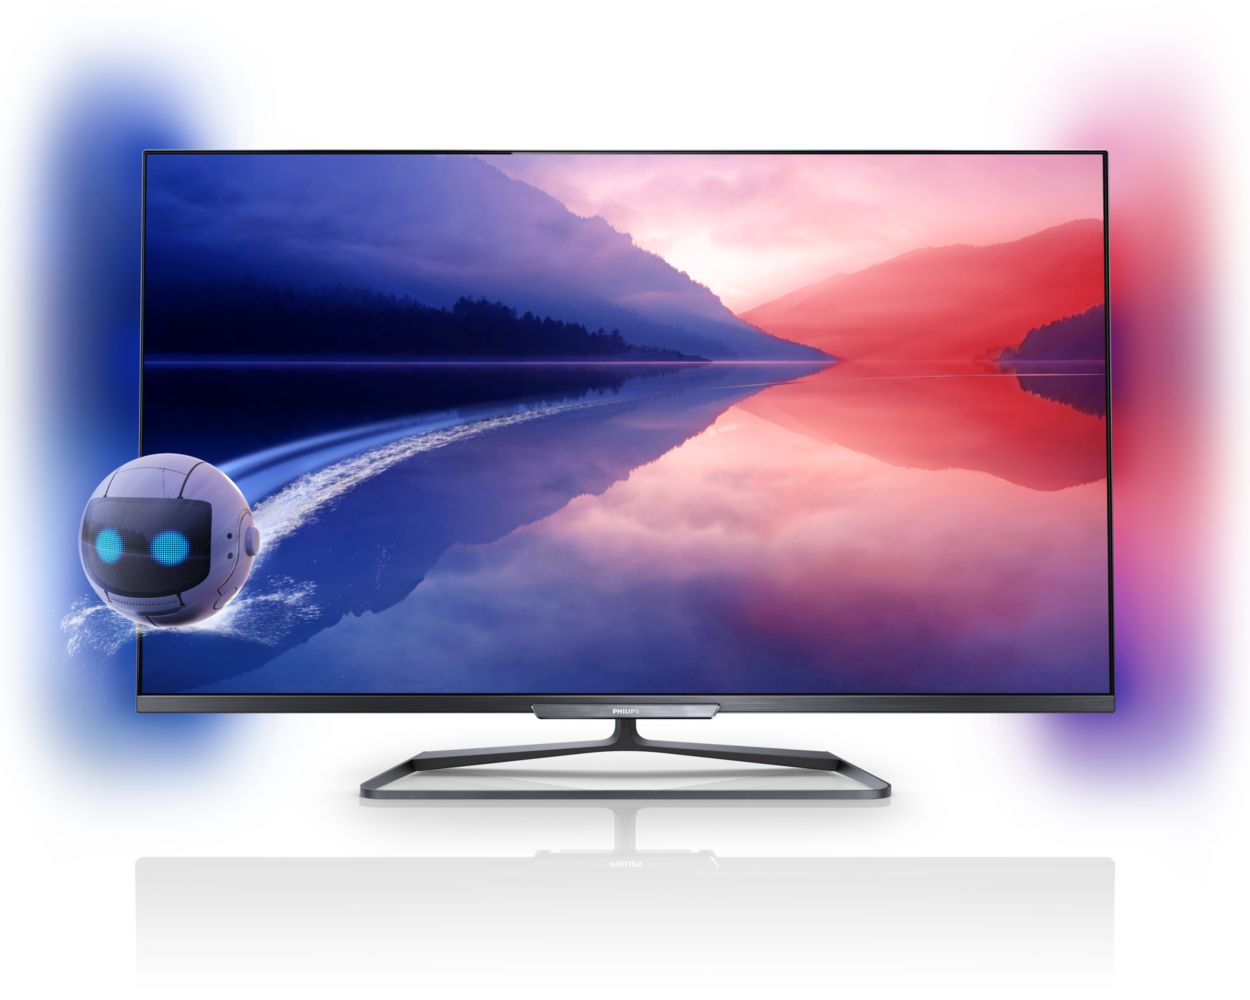 6000 series 3D Ultra Slim Smart LED TV 42PFL6008H/12